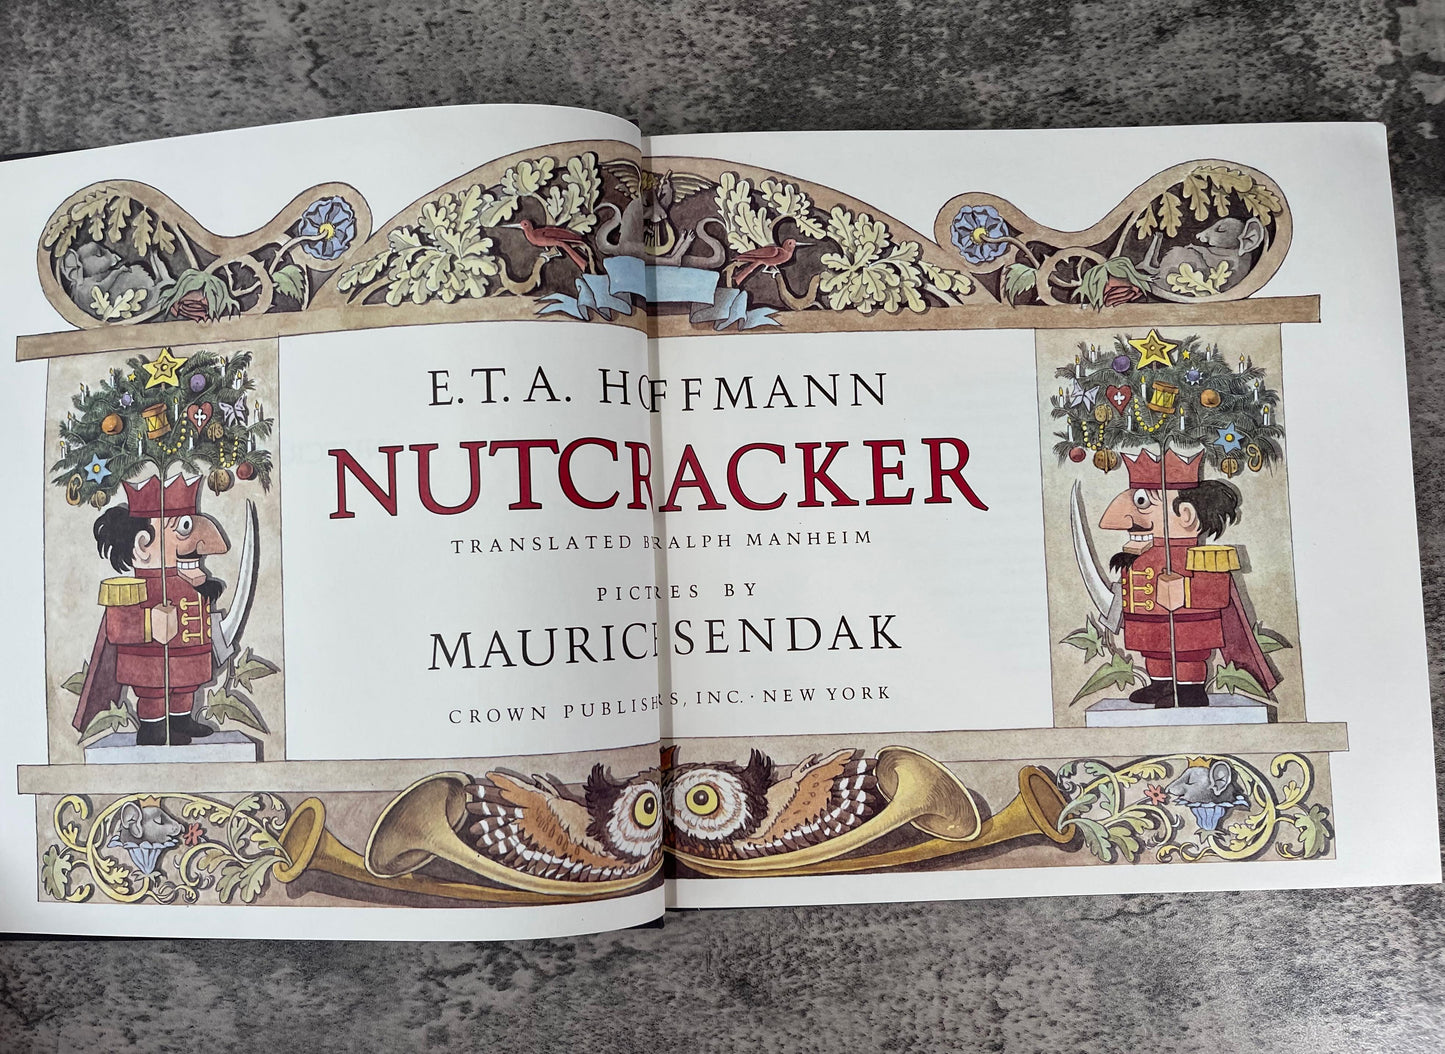 Nutcracker / Pictures by Maurice Sendak / 1989 - Precious Cache